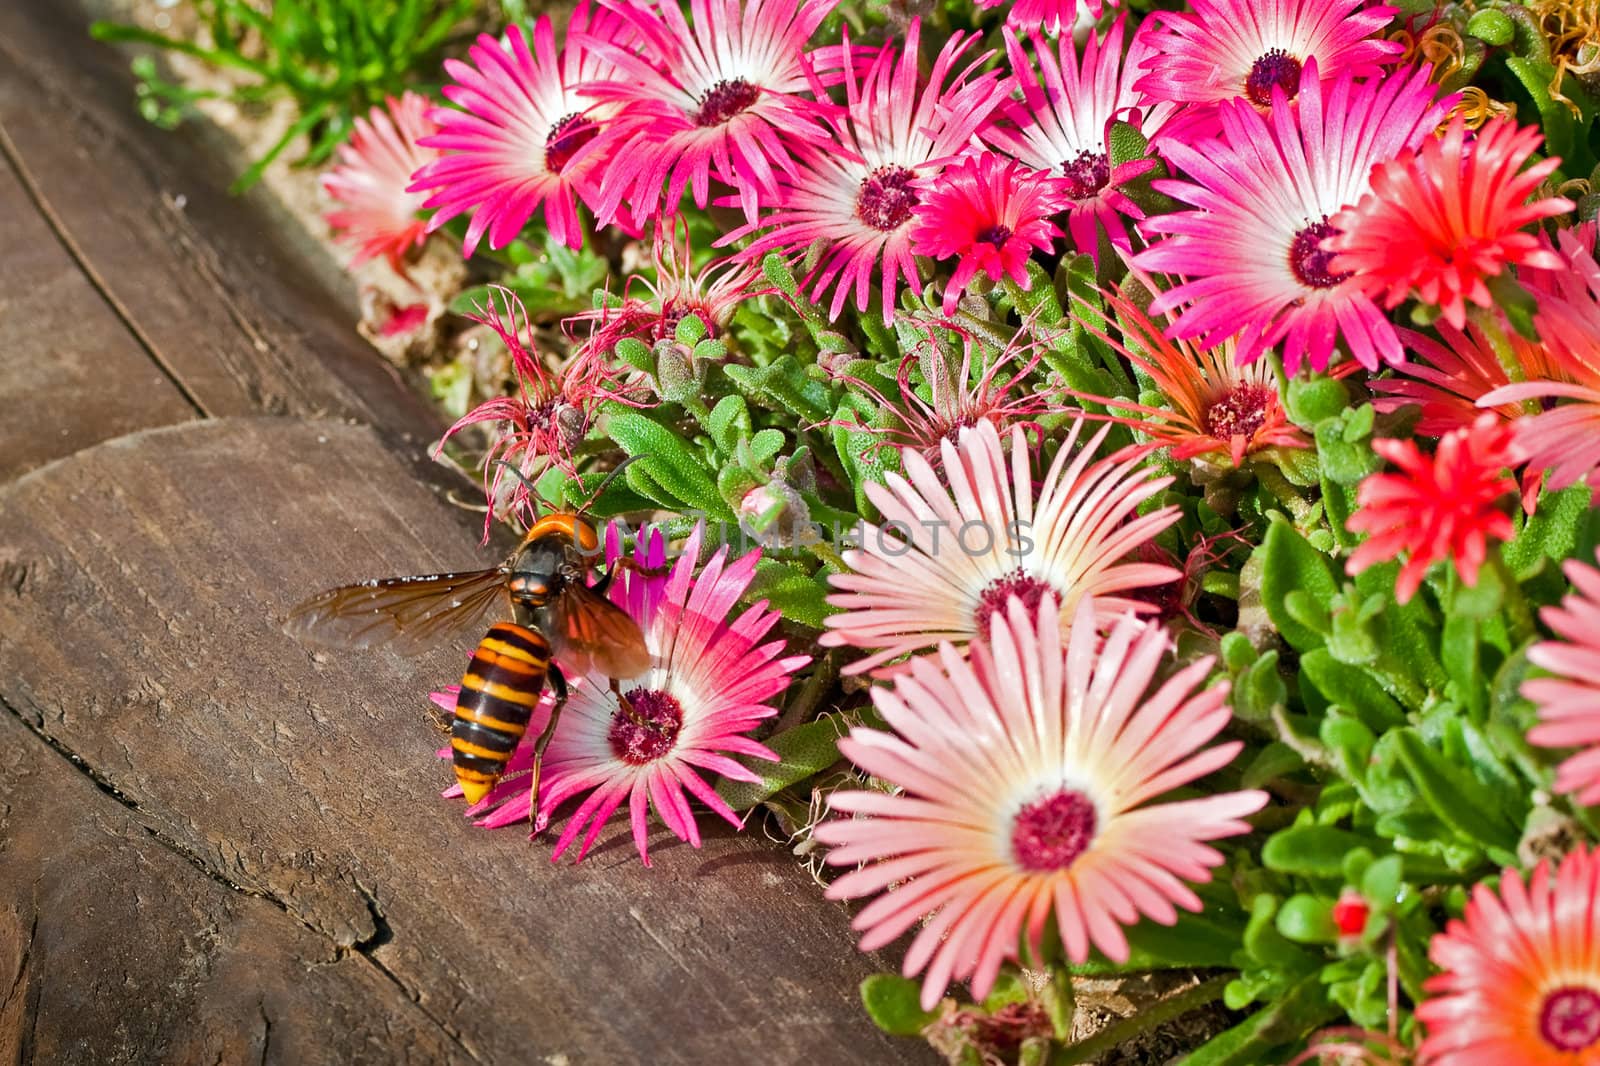 Hornet on a gerbera flower by dsmsoft